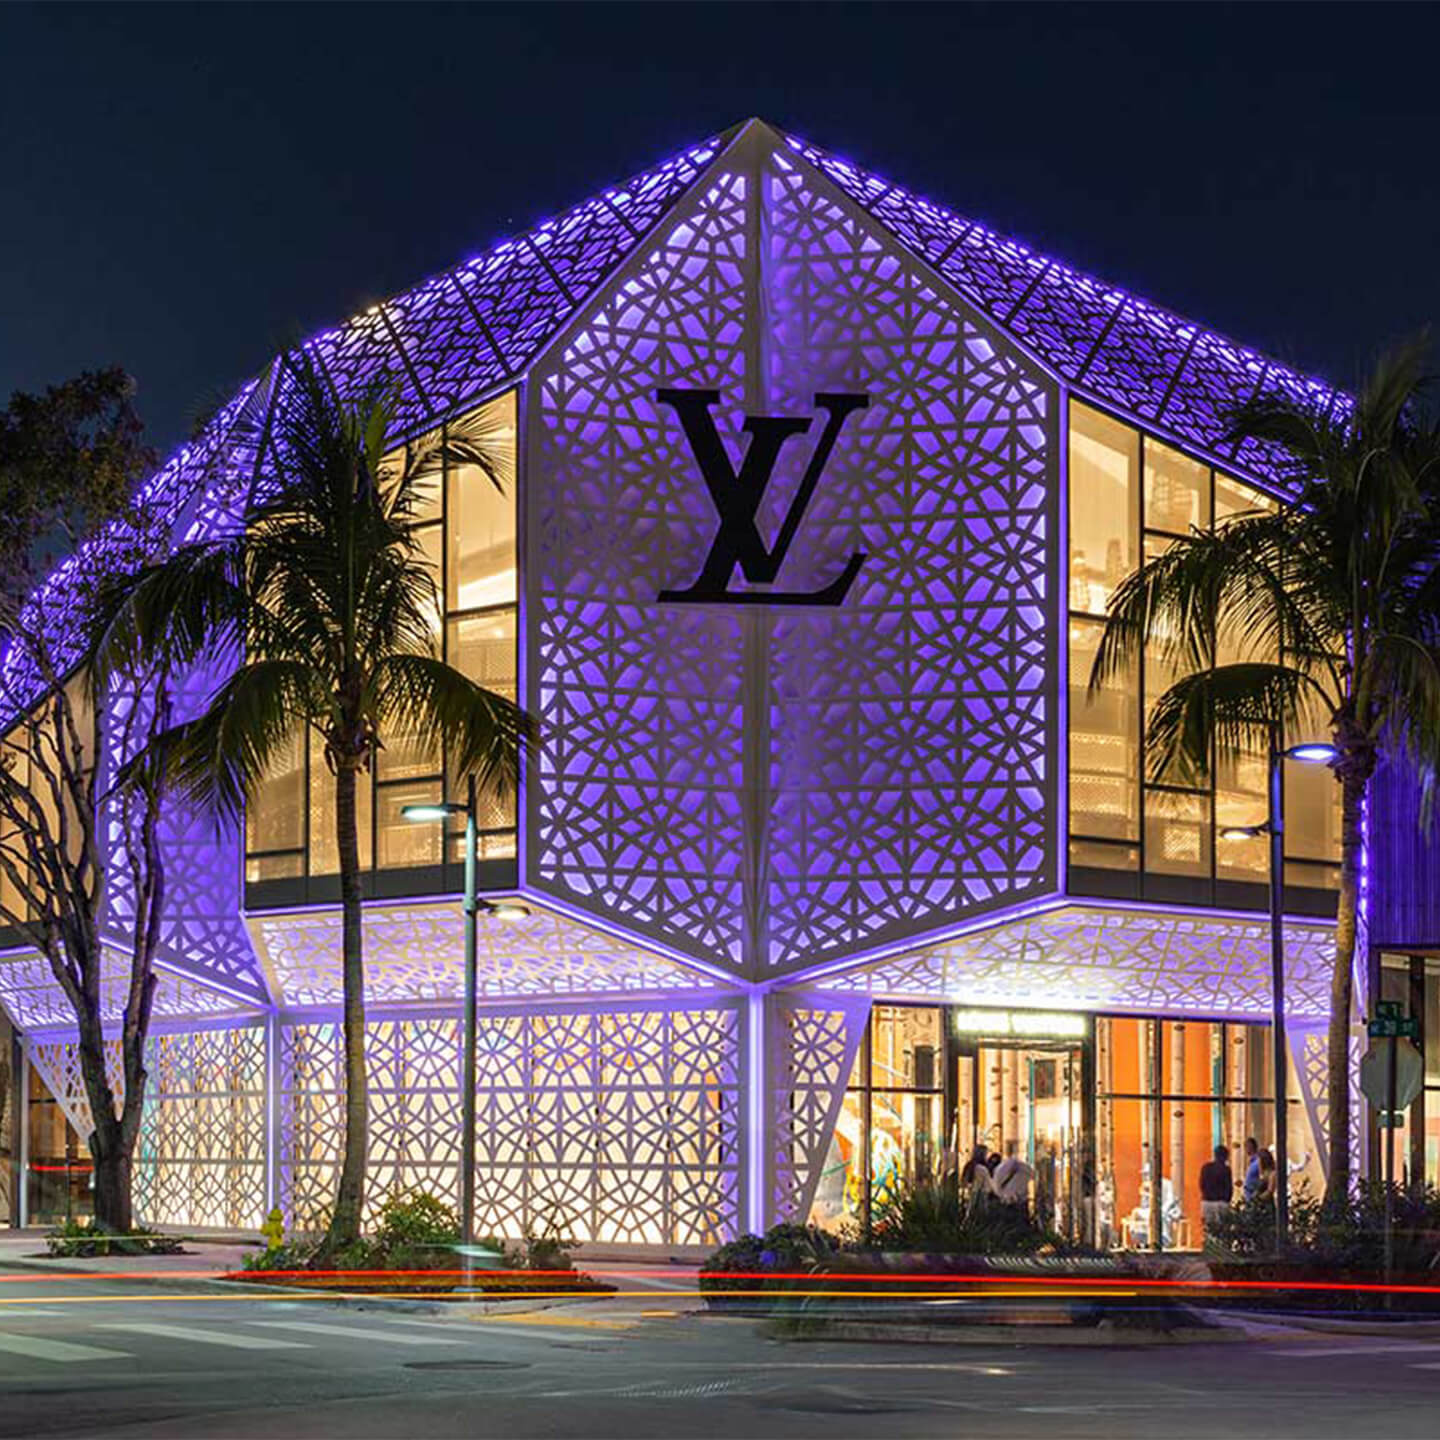 Louis Vuitton Miami Art Districts Maplewood